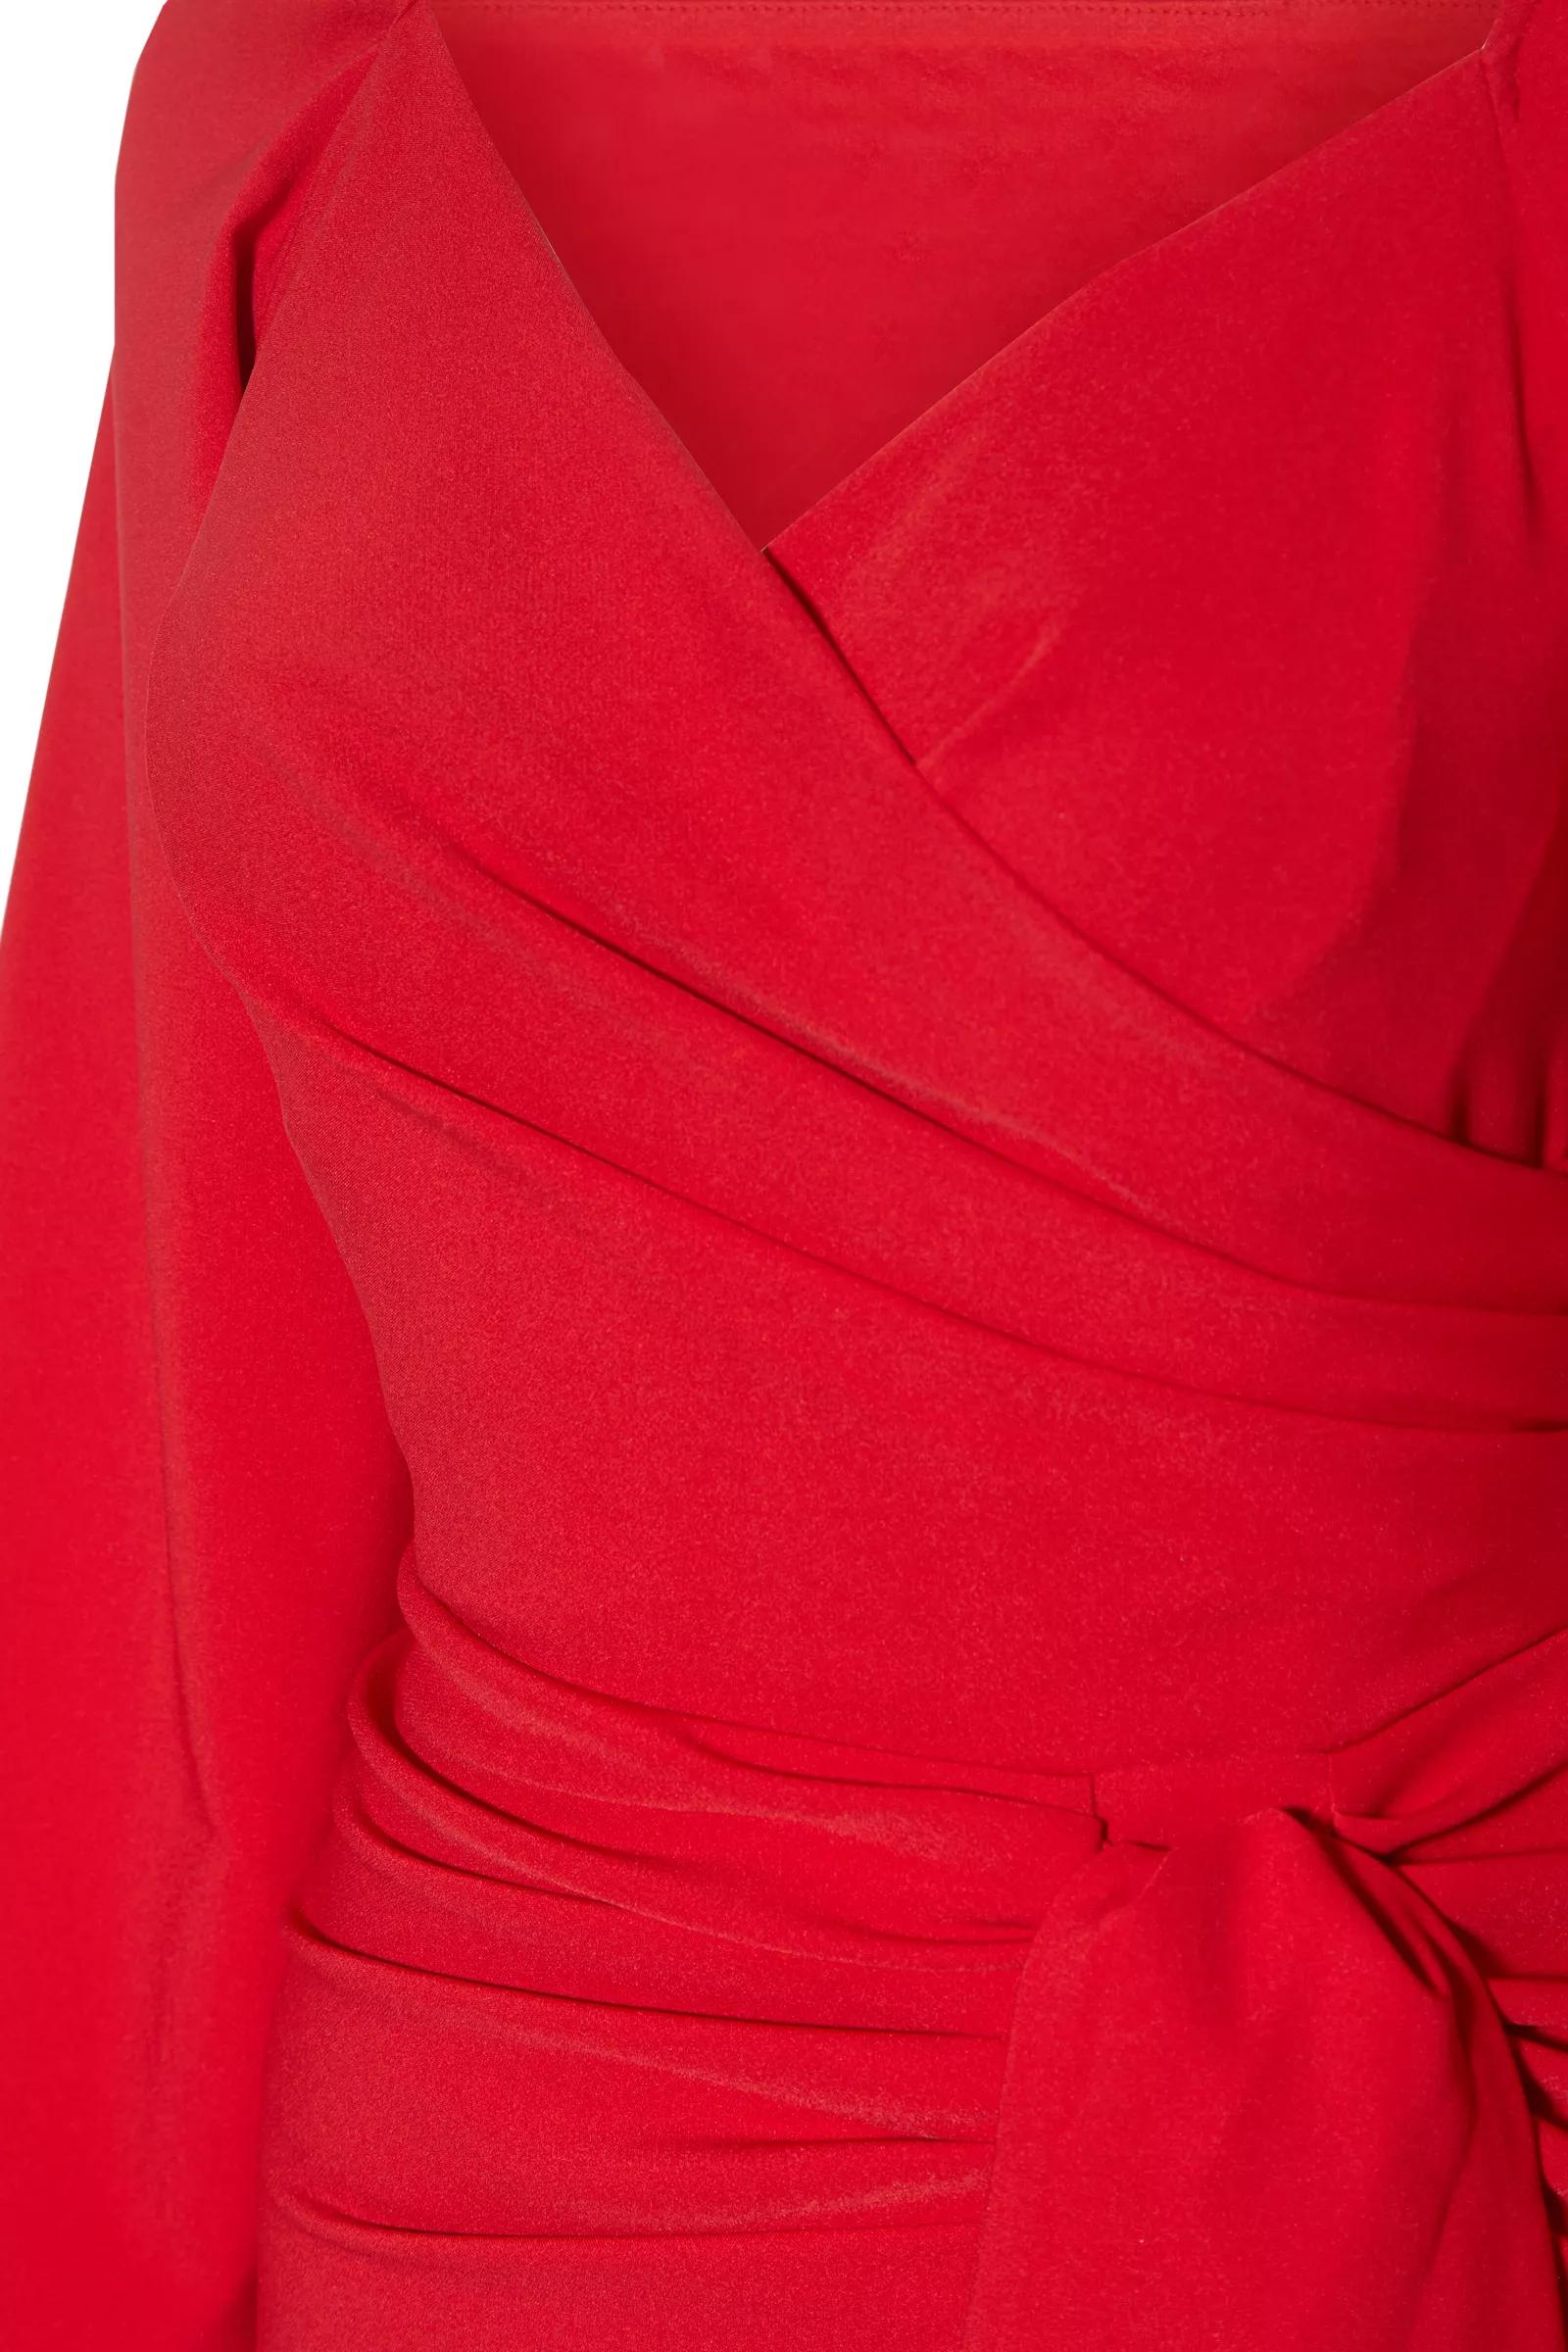 Red crepe long sleeve mini dress